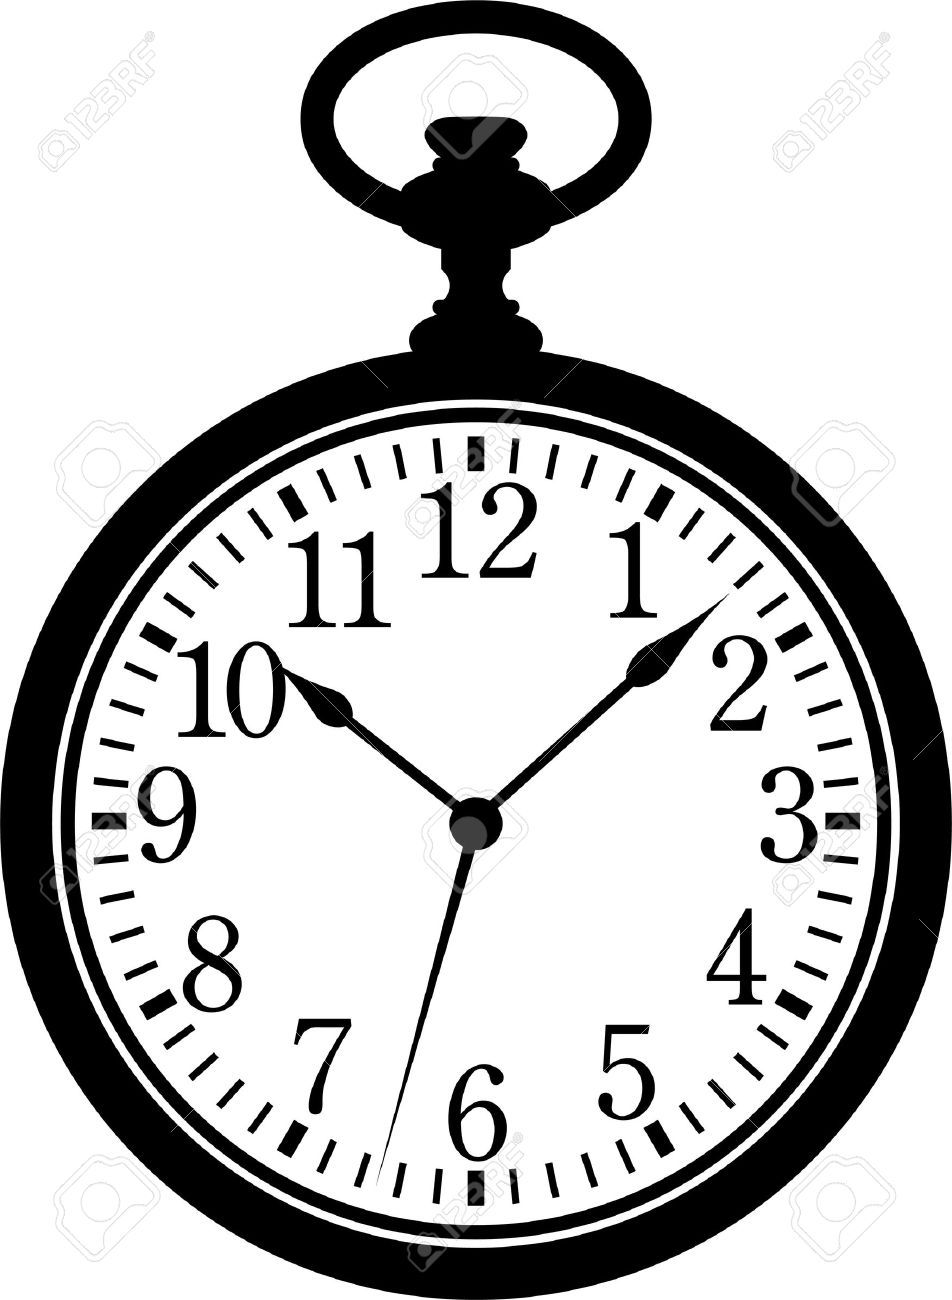 White rabbit clock template